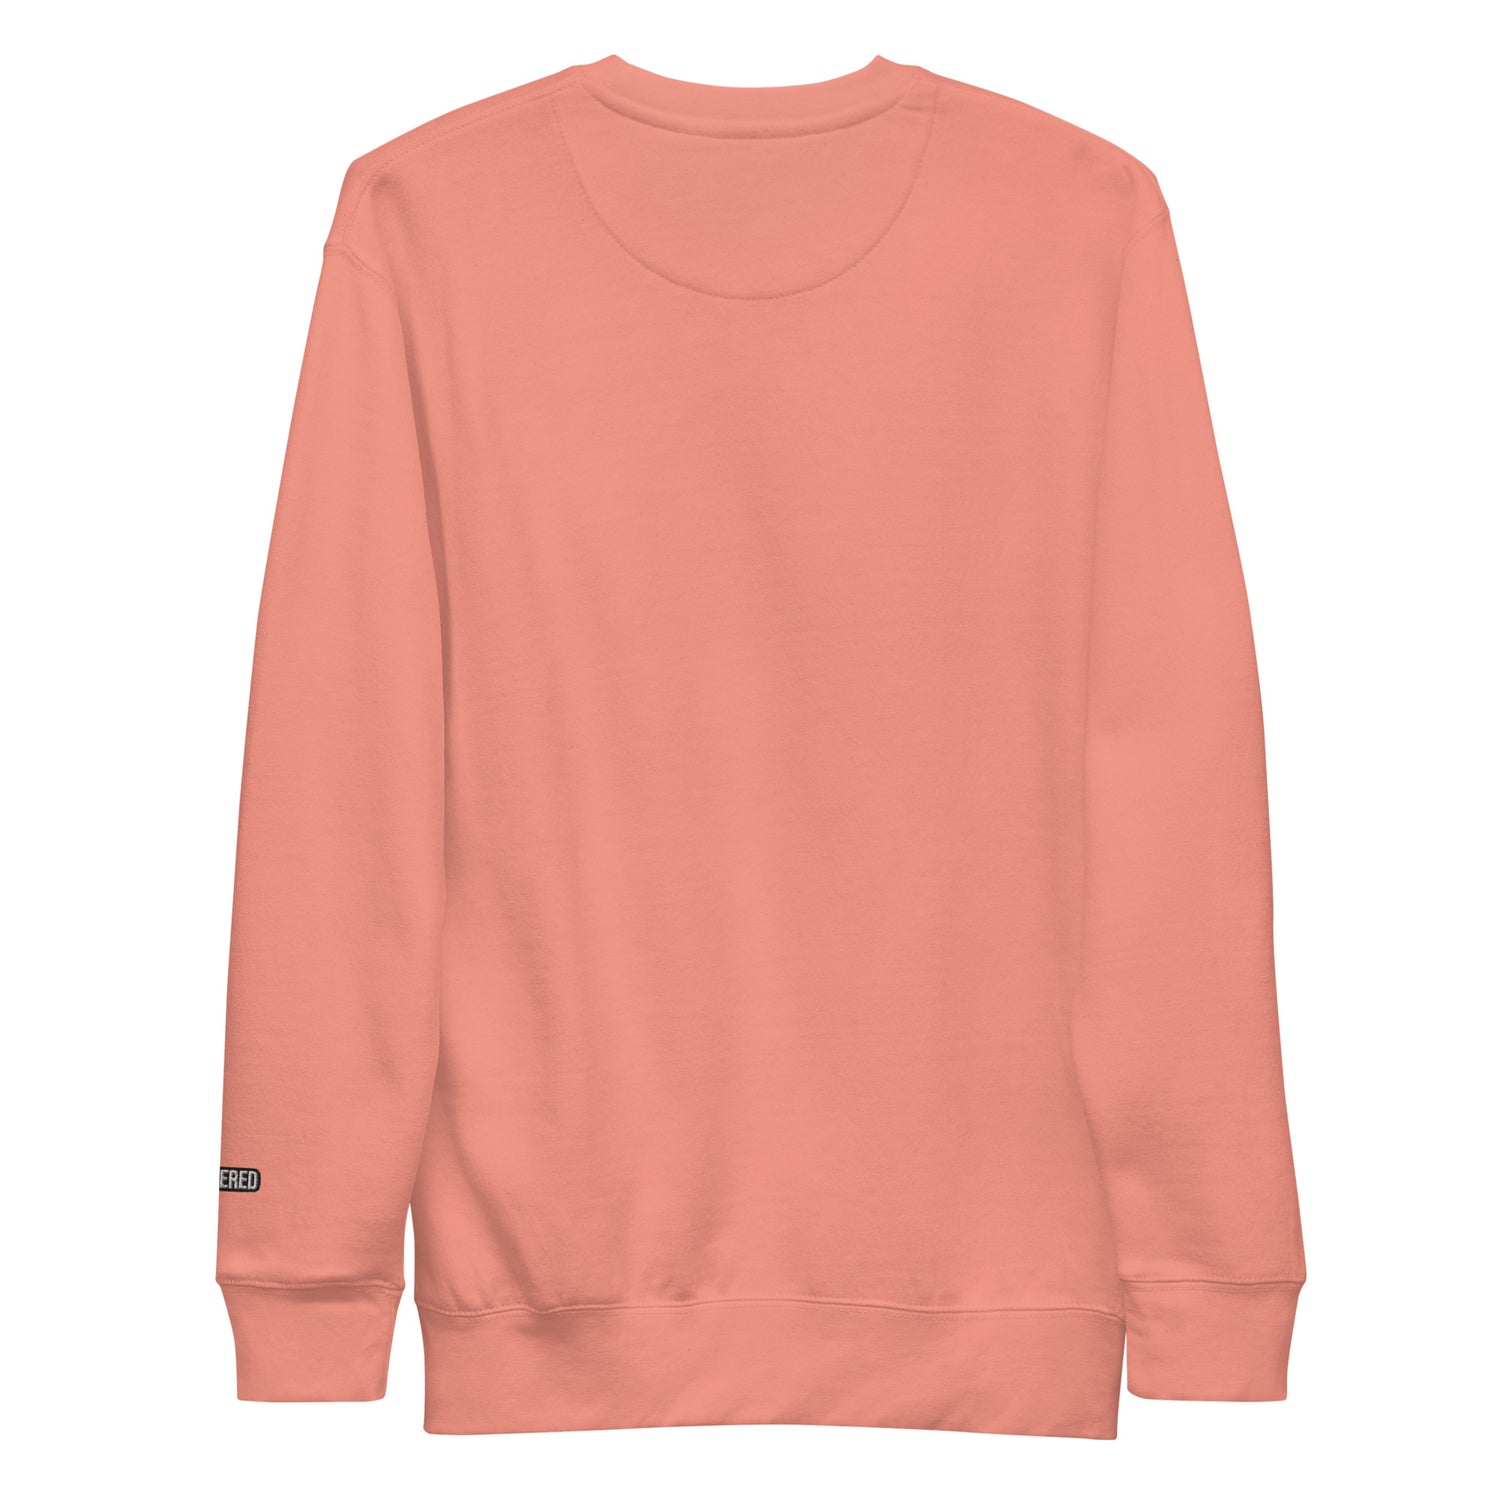 New York Apple Logo Embroidered Salmon Pink Crewneck Sweatshirt Scattered Streetwear